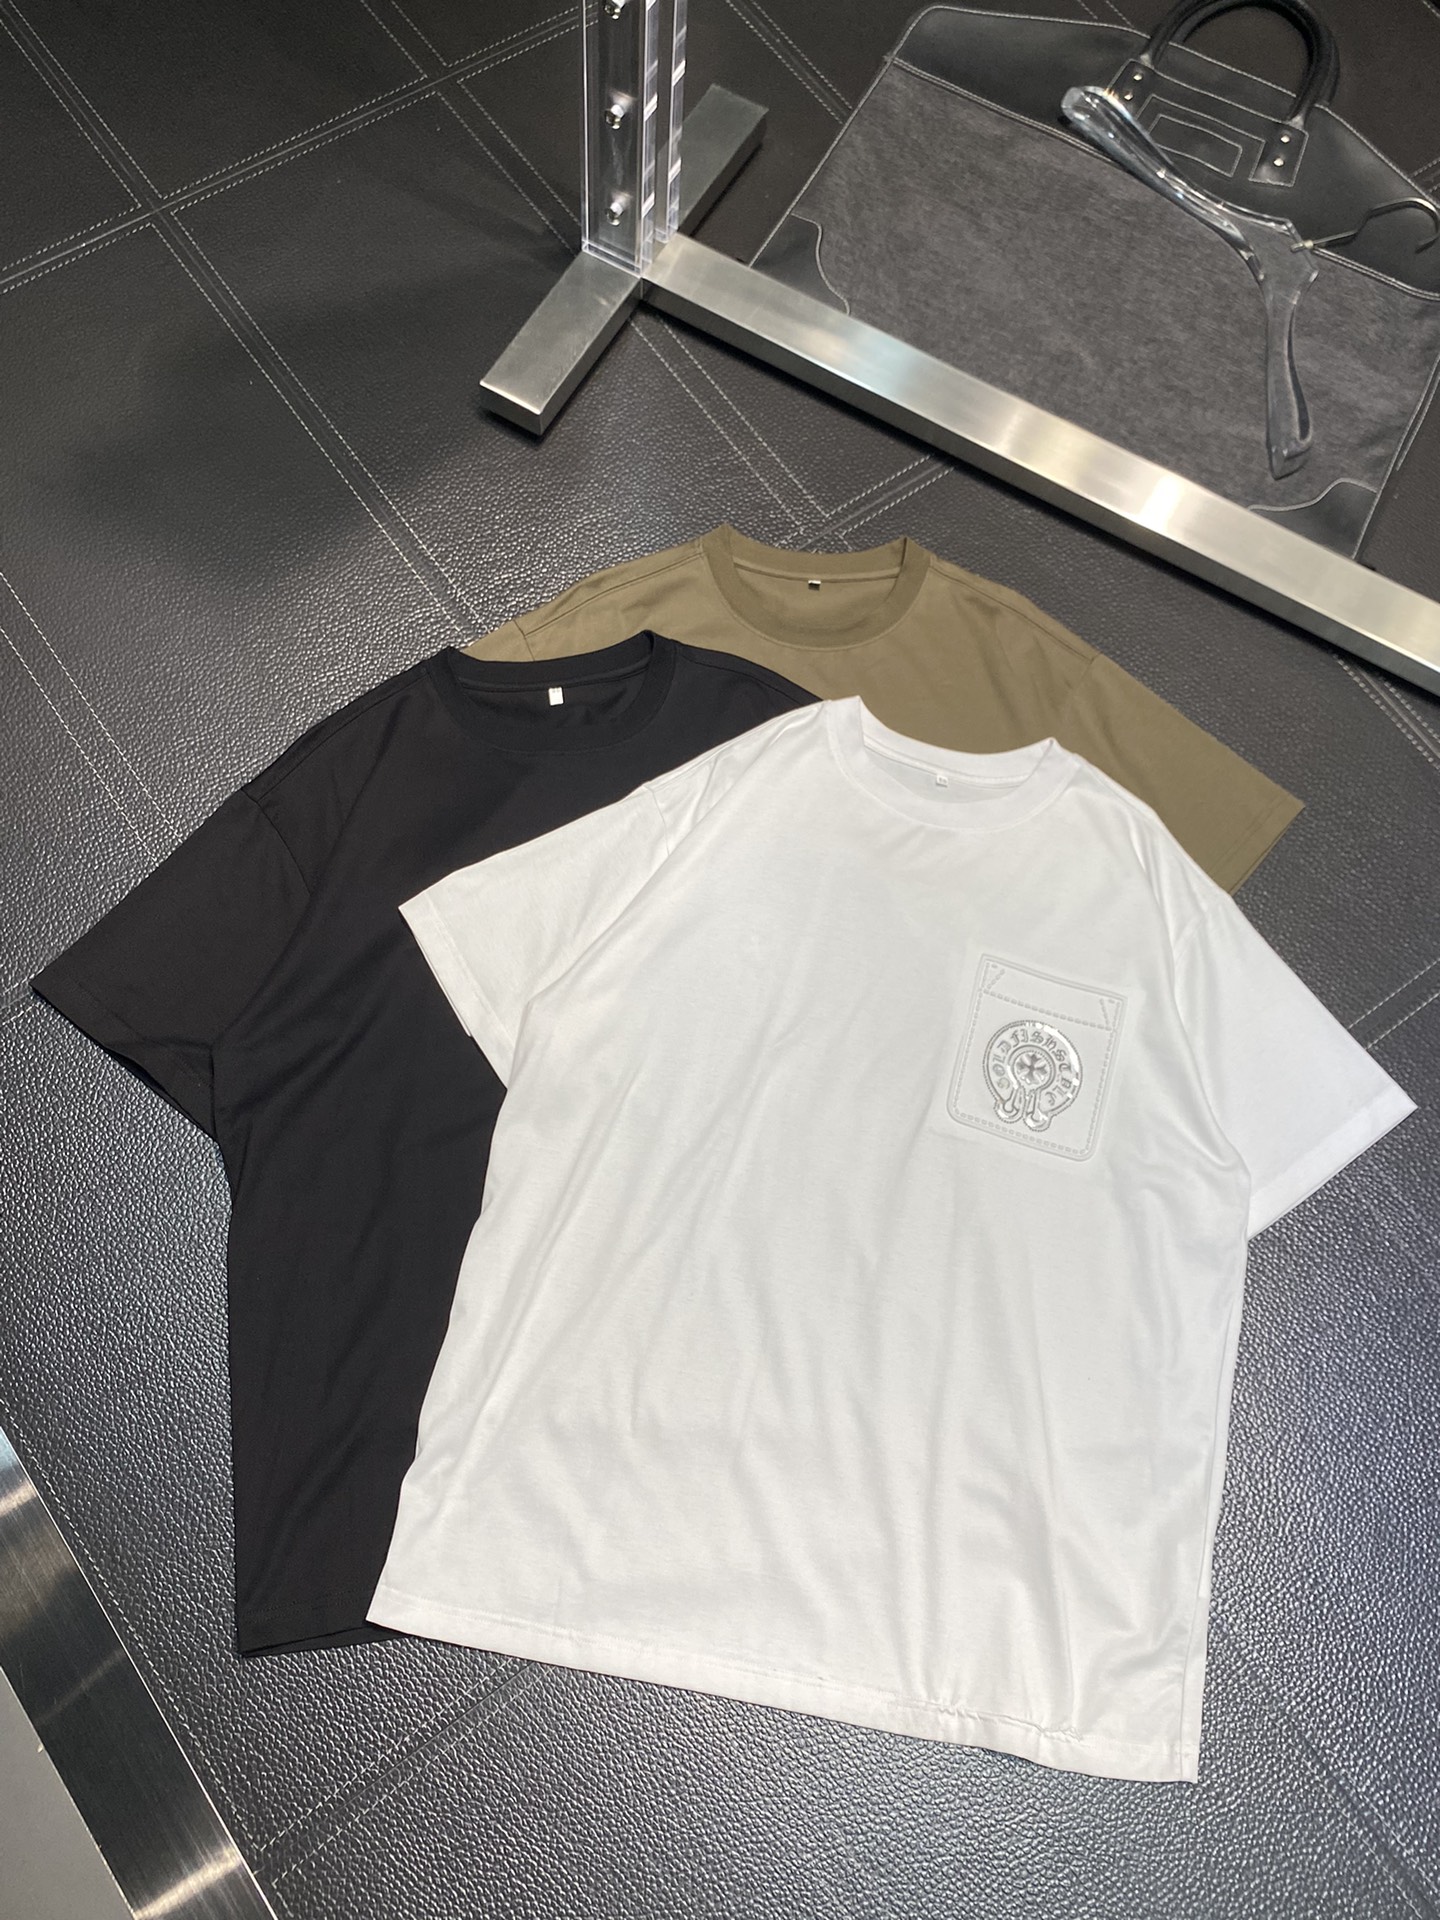 Chrome Hearts Clothing T-Shirt 1:1 Replica Wholesale
 Men Fashion Short Sleeve